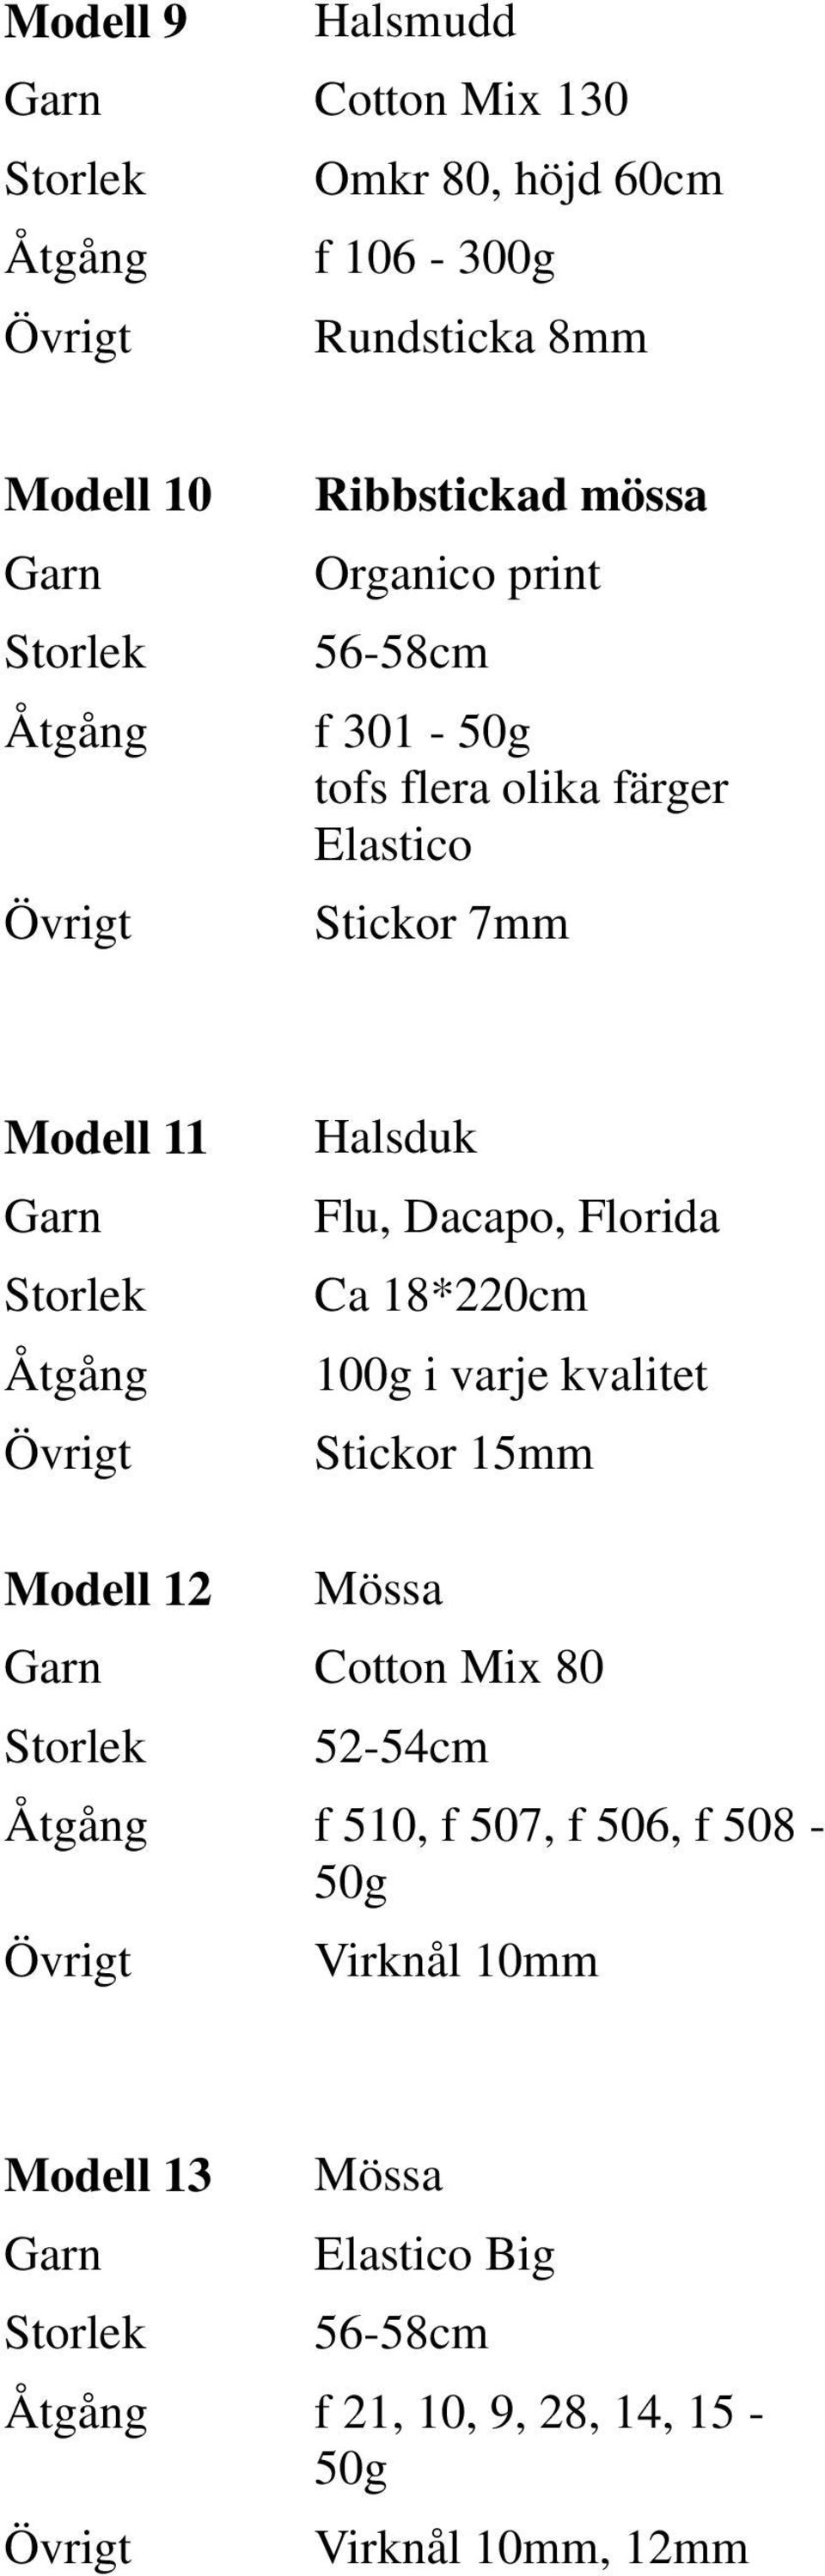 Dacapo, Florida Ca 18*220cm 100g i varje kvalitet Stickor 15mm Modell 12 Cotton Mix 80 52-54cm f 510,